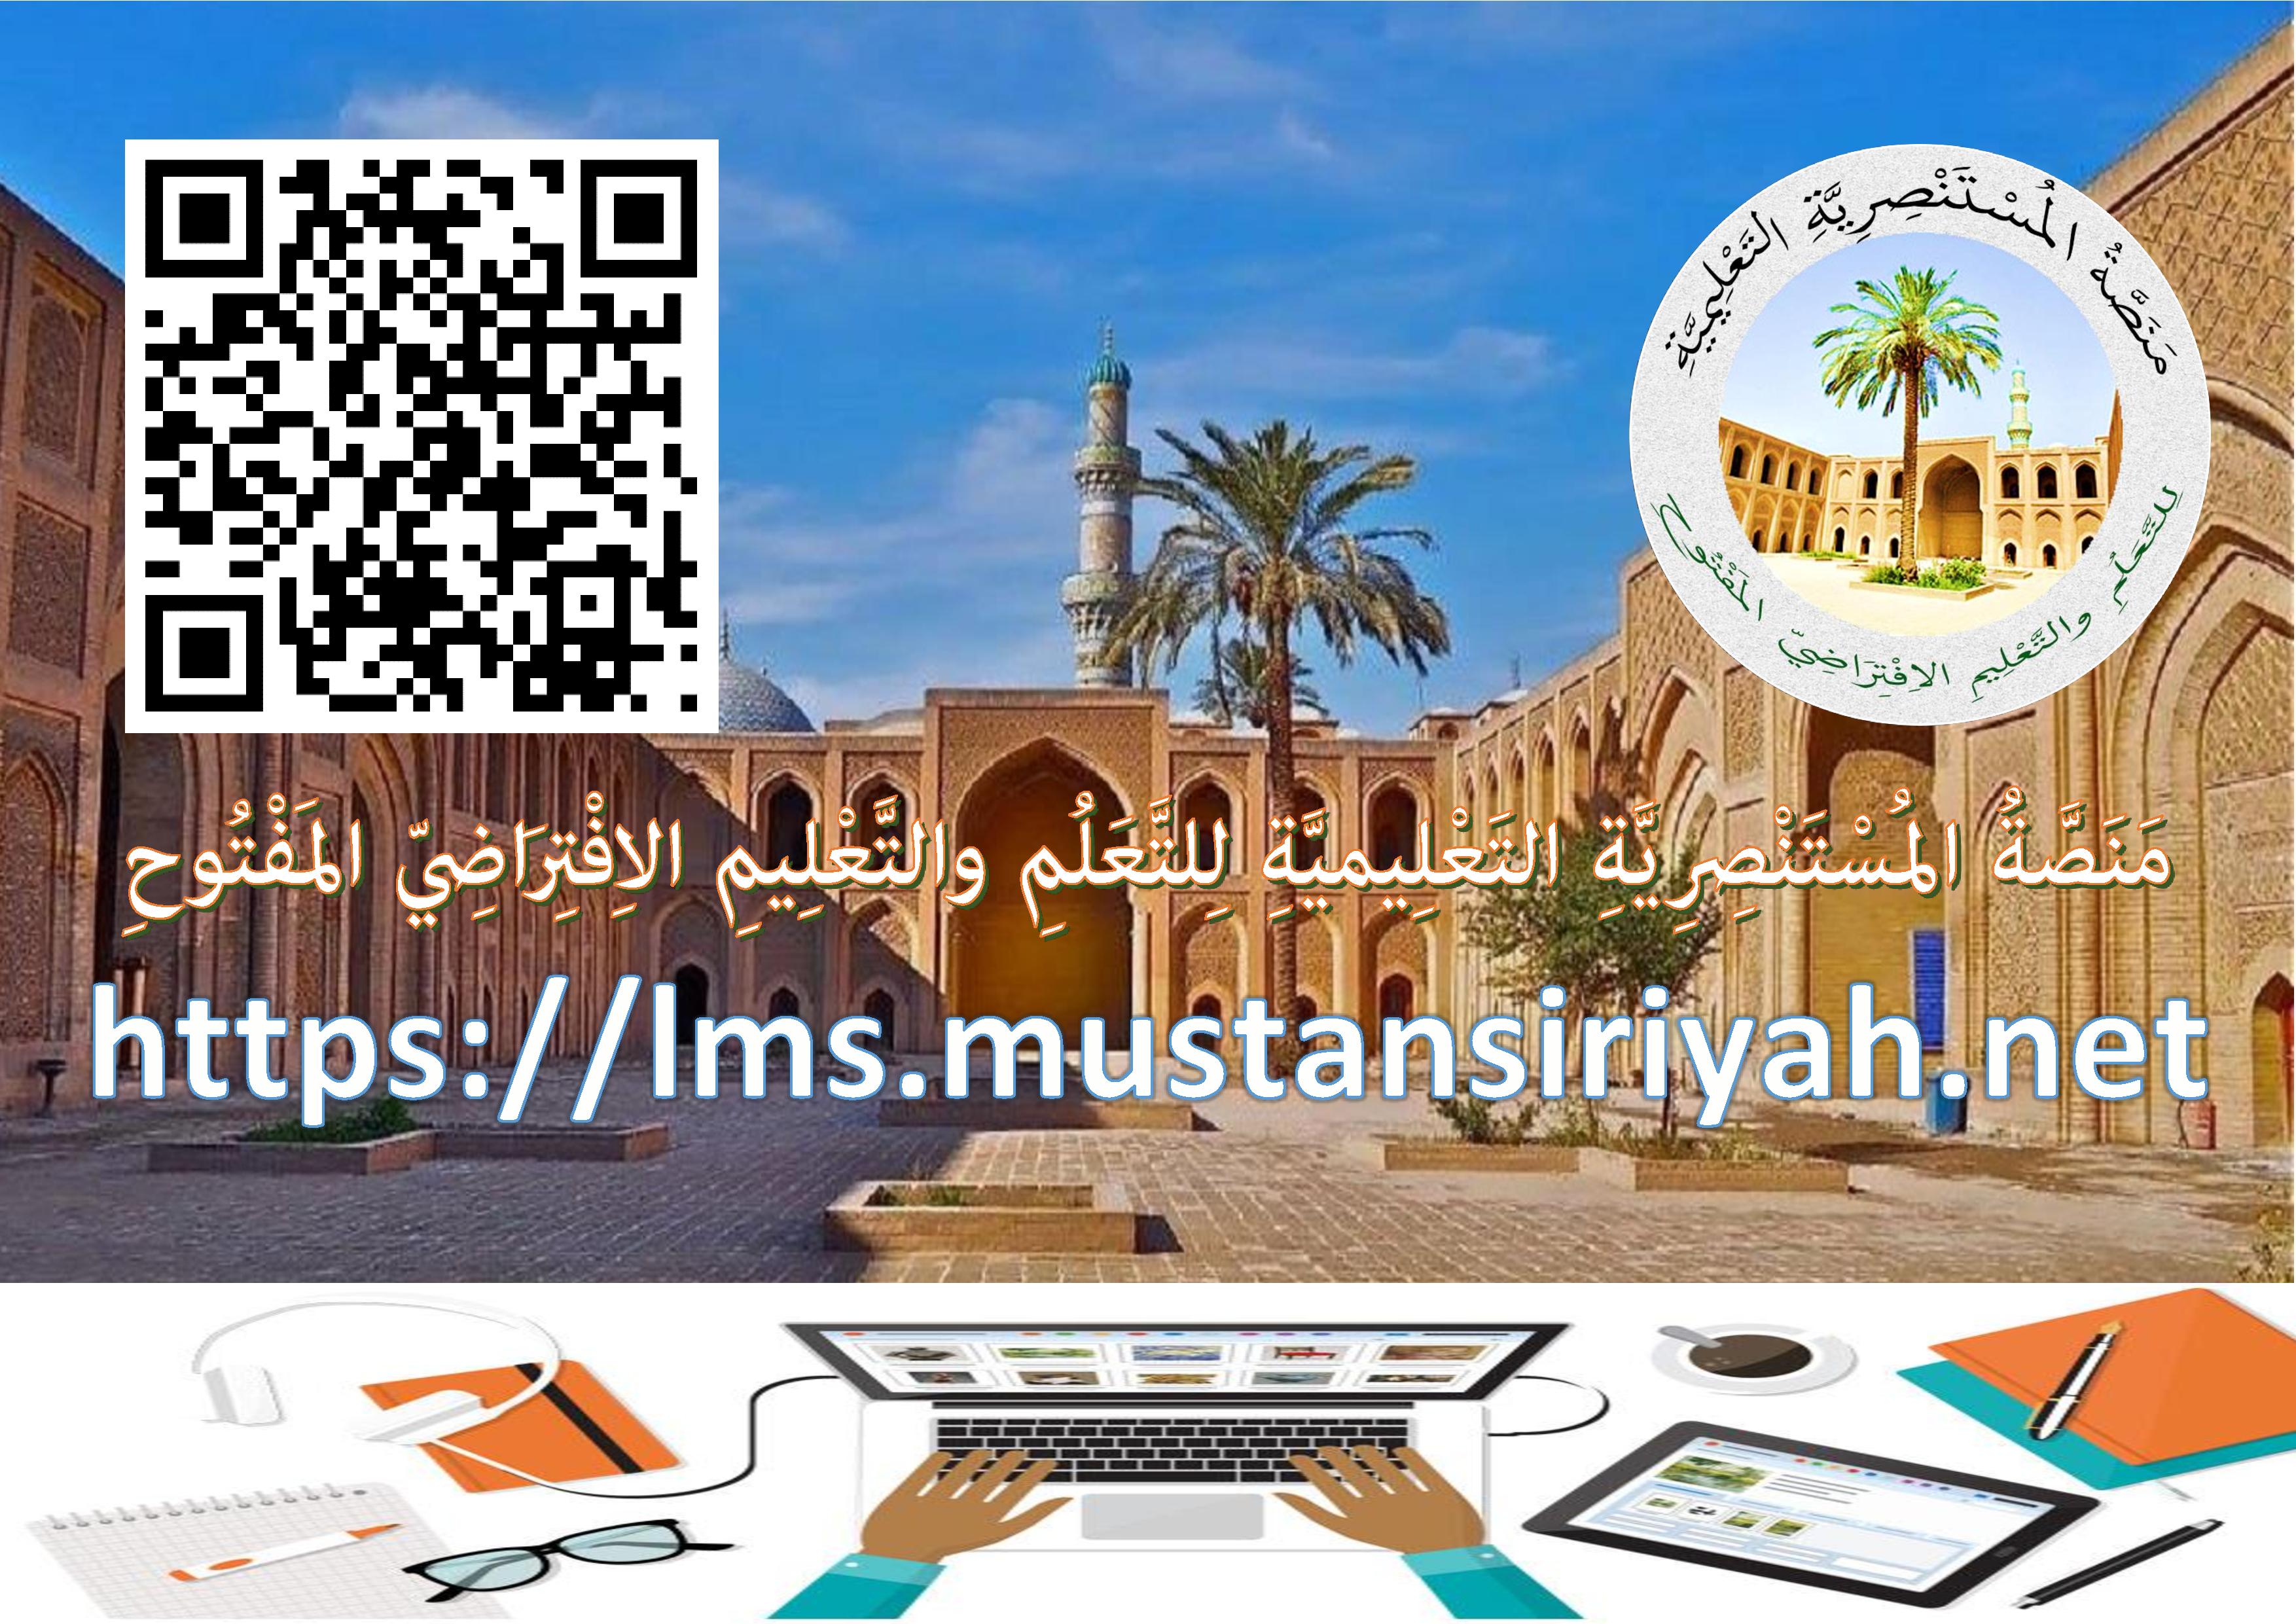 Al-Mustansiriya eğitim platformu